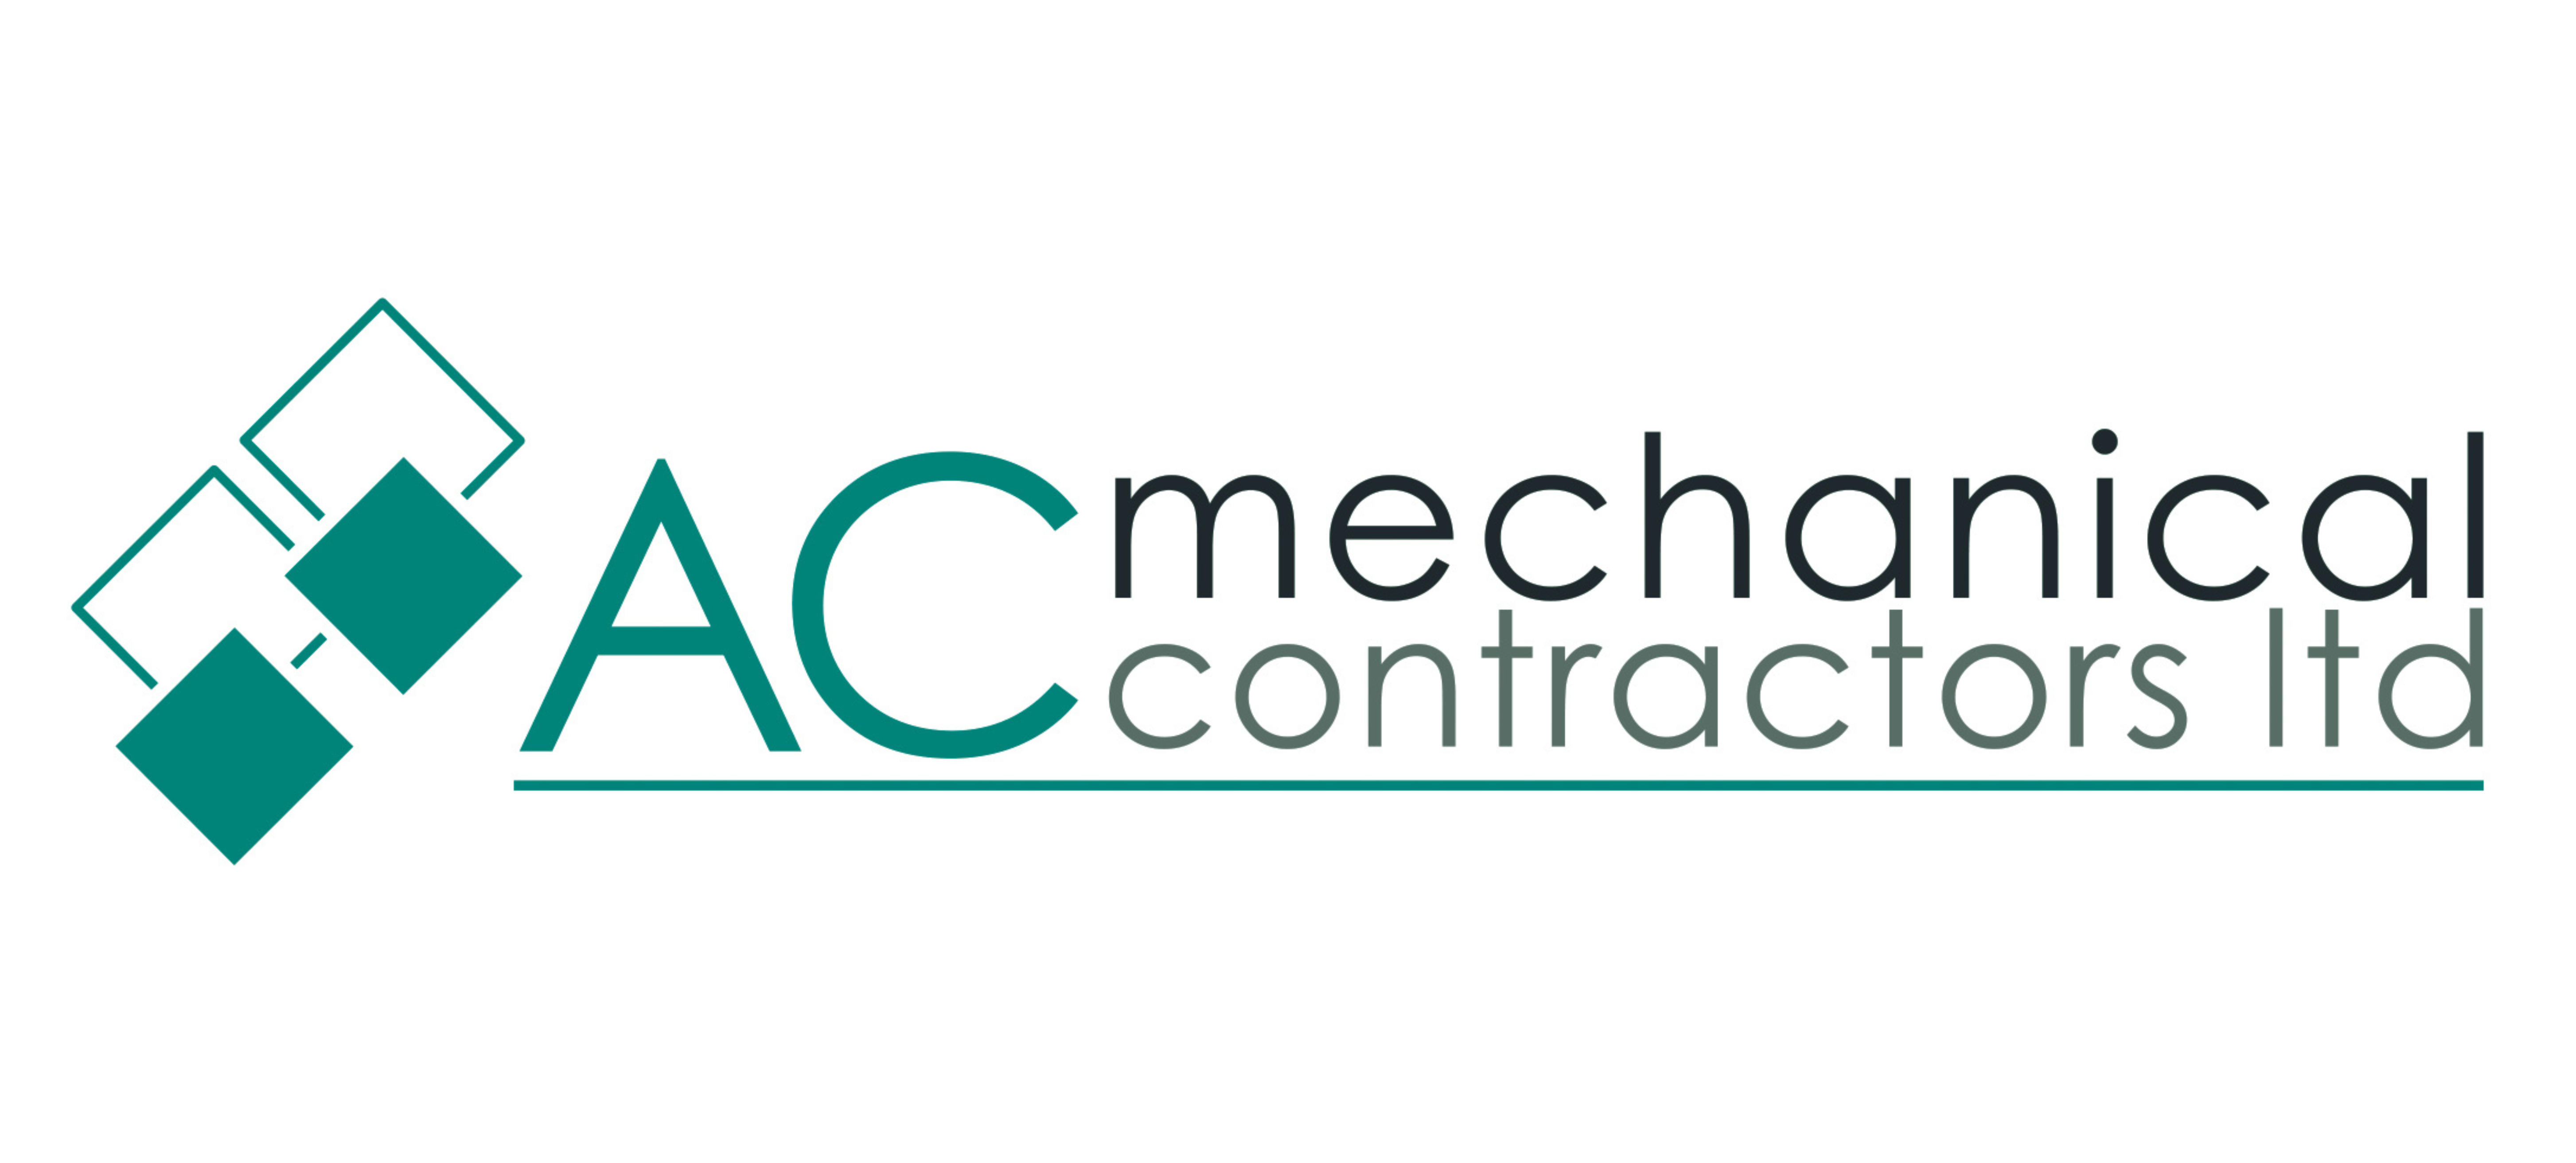 AC Mechanical Contractors